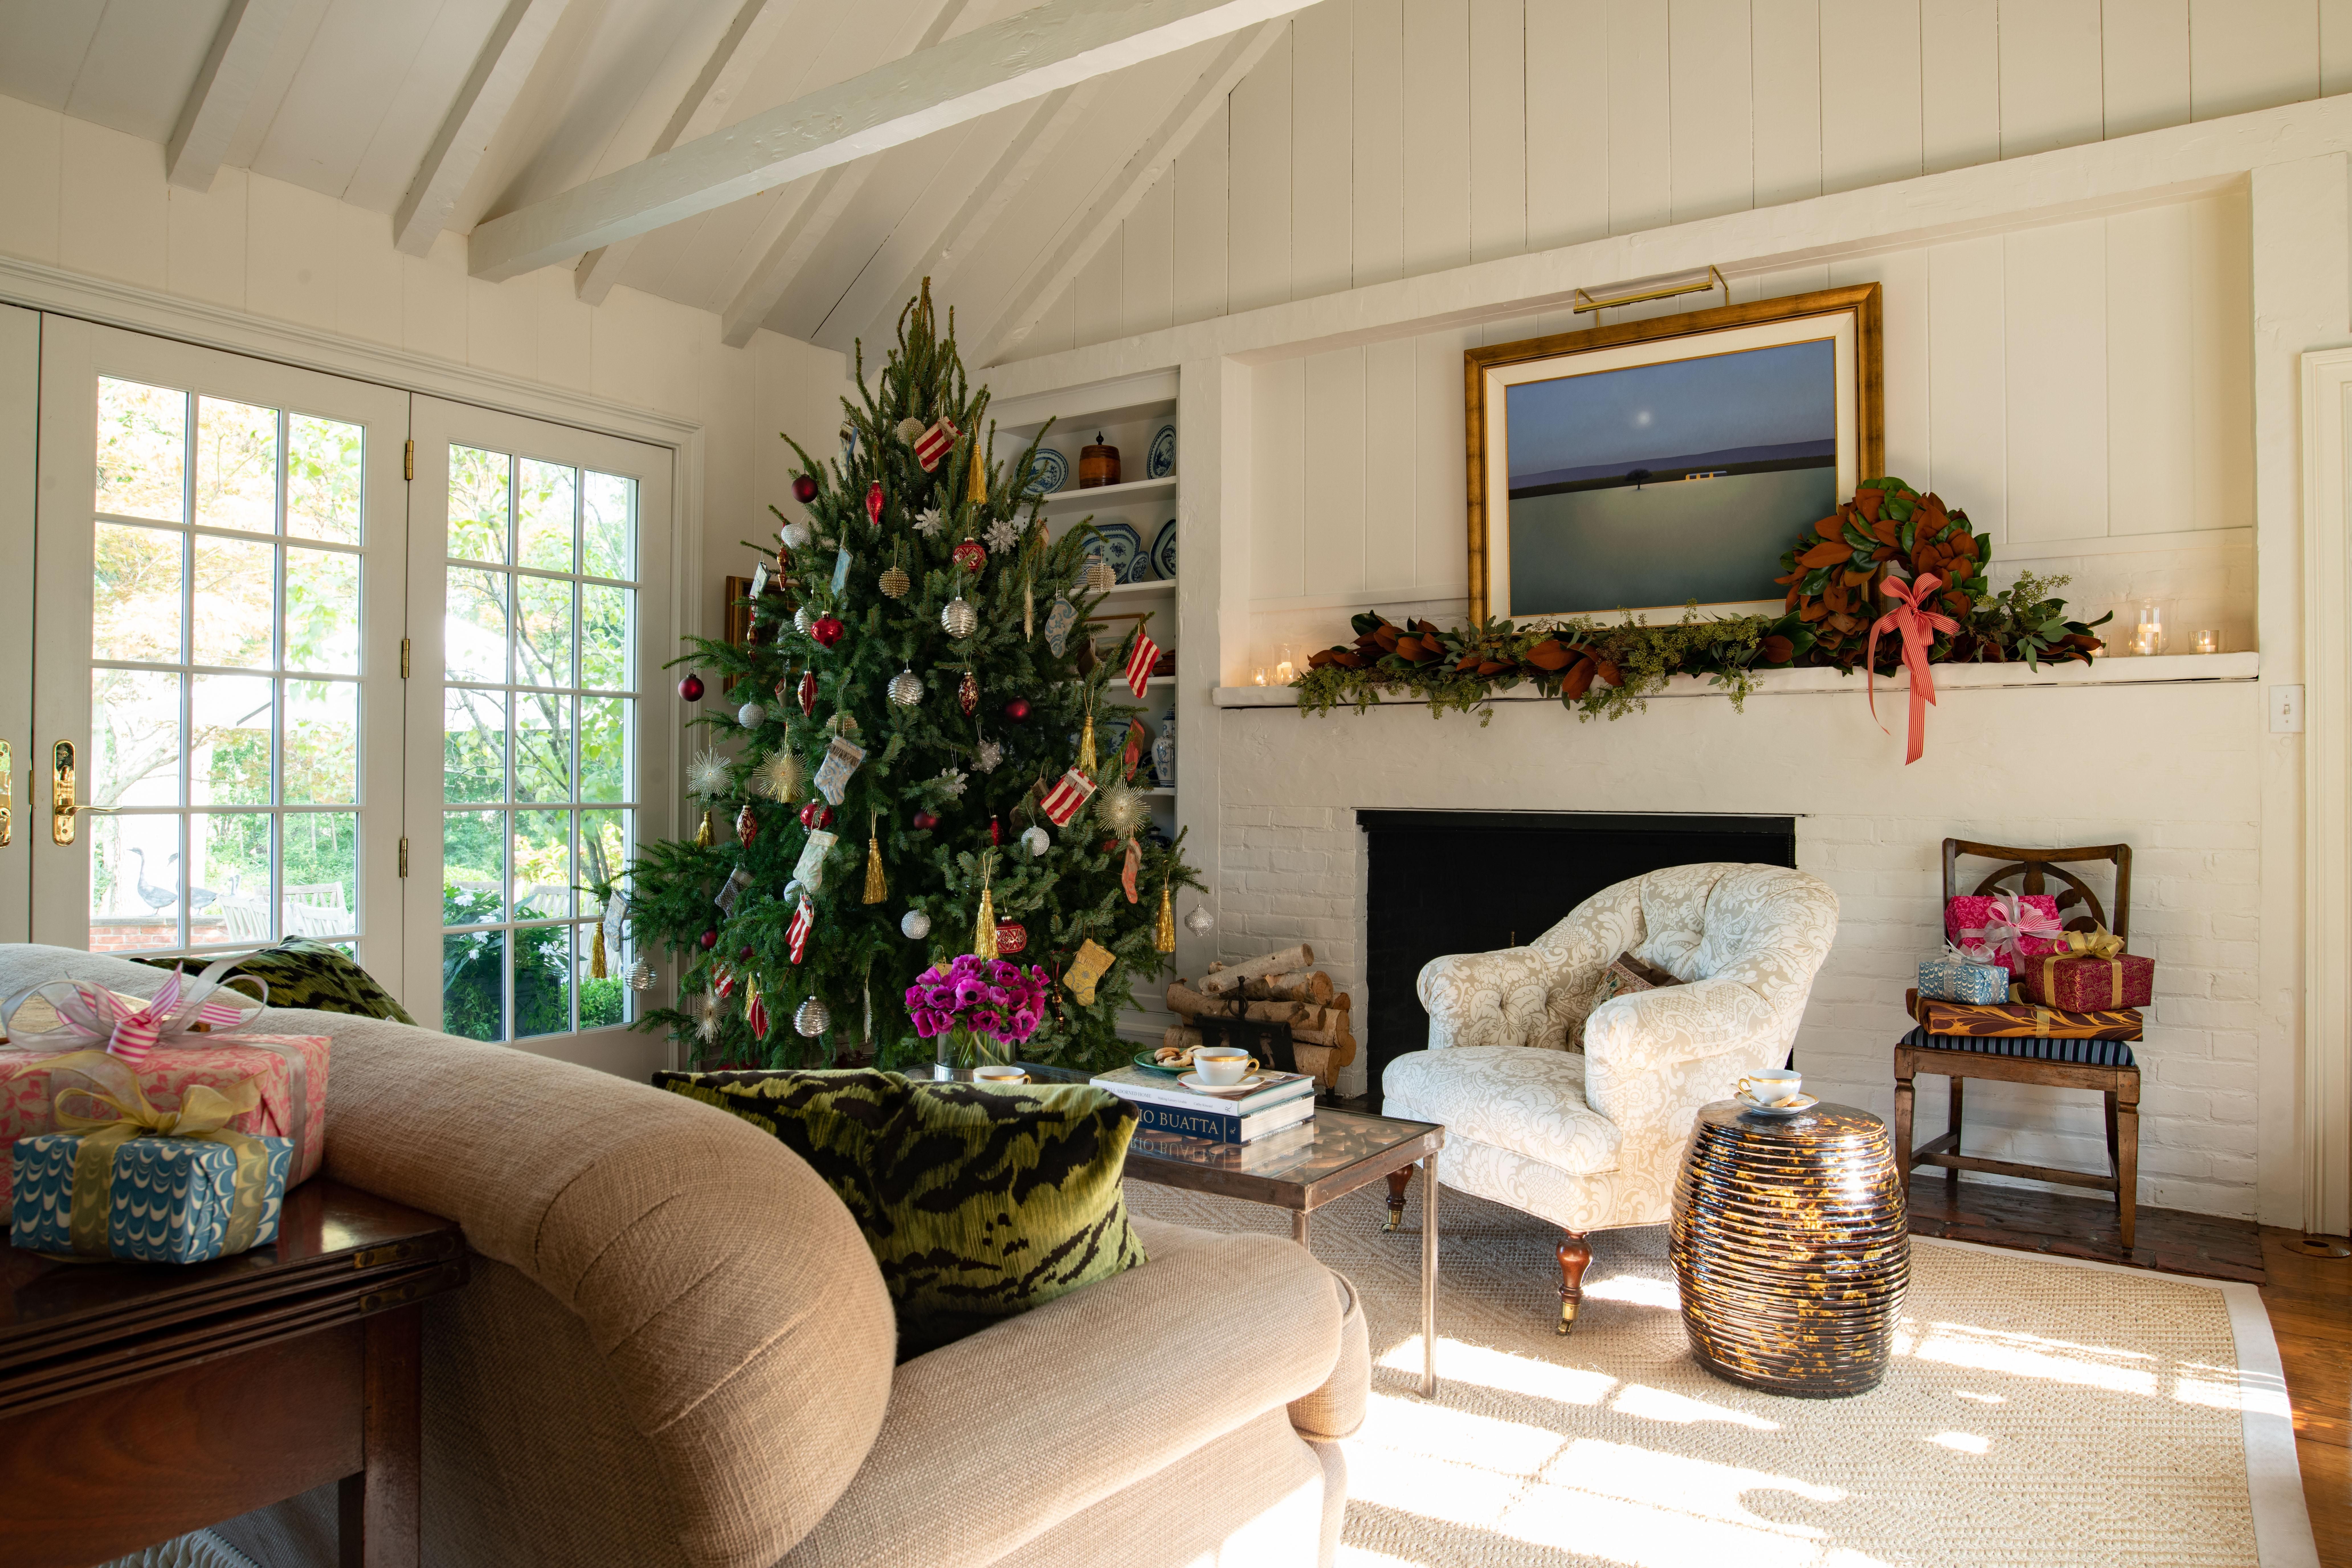 35+ Best Christmas Living Room Decor Ideas - Holiday Decorating